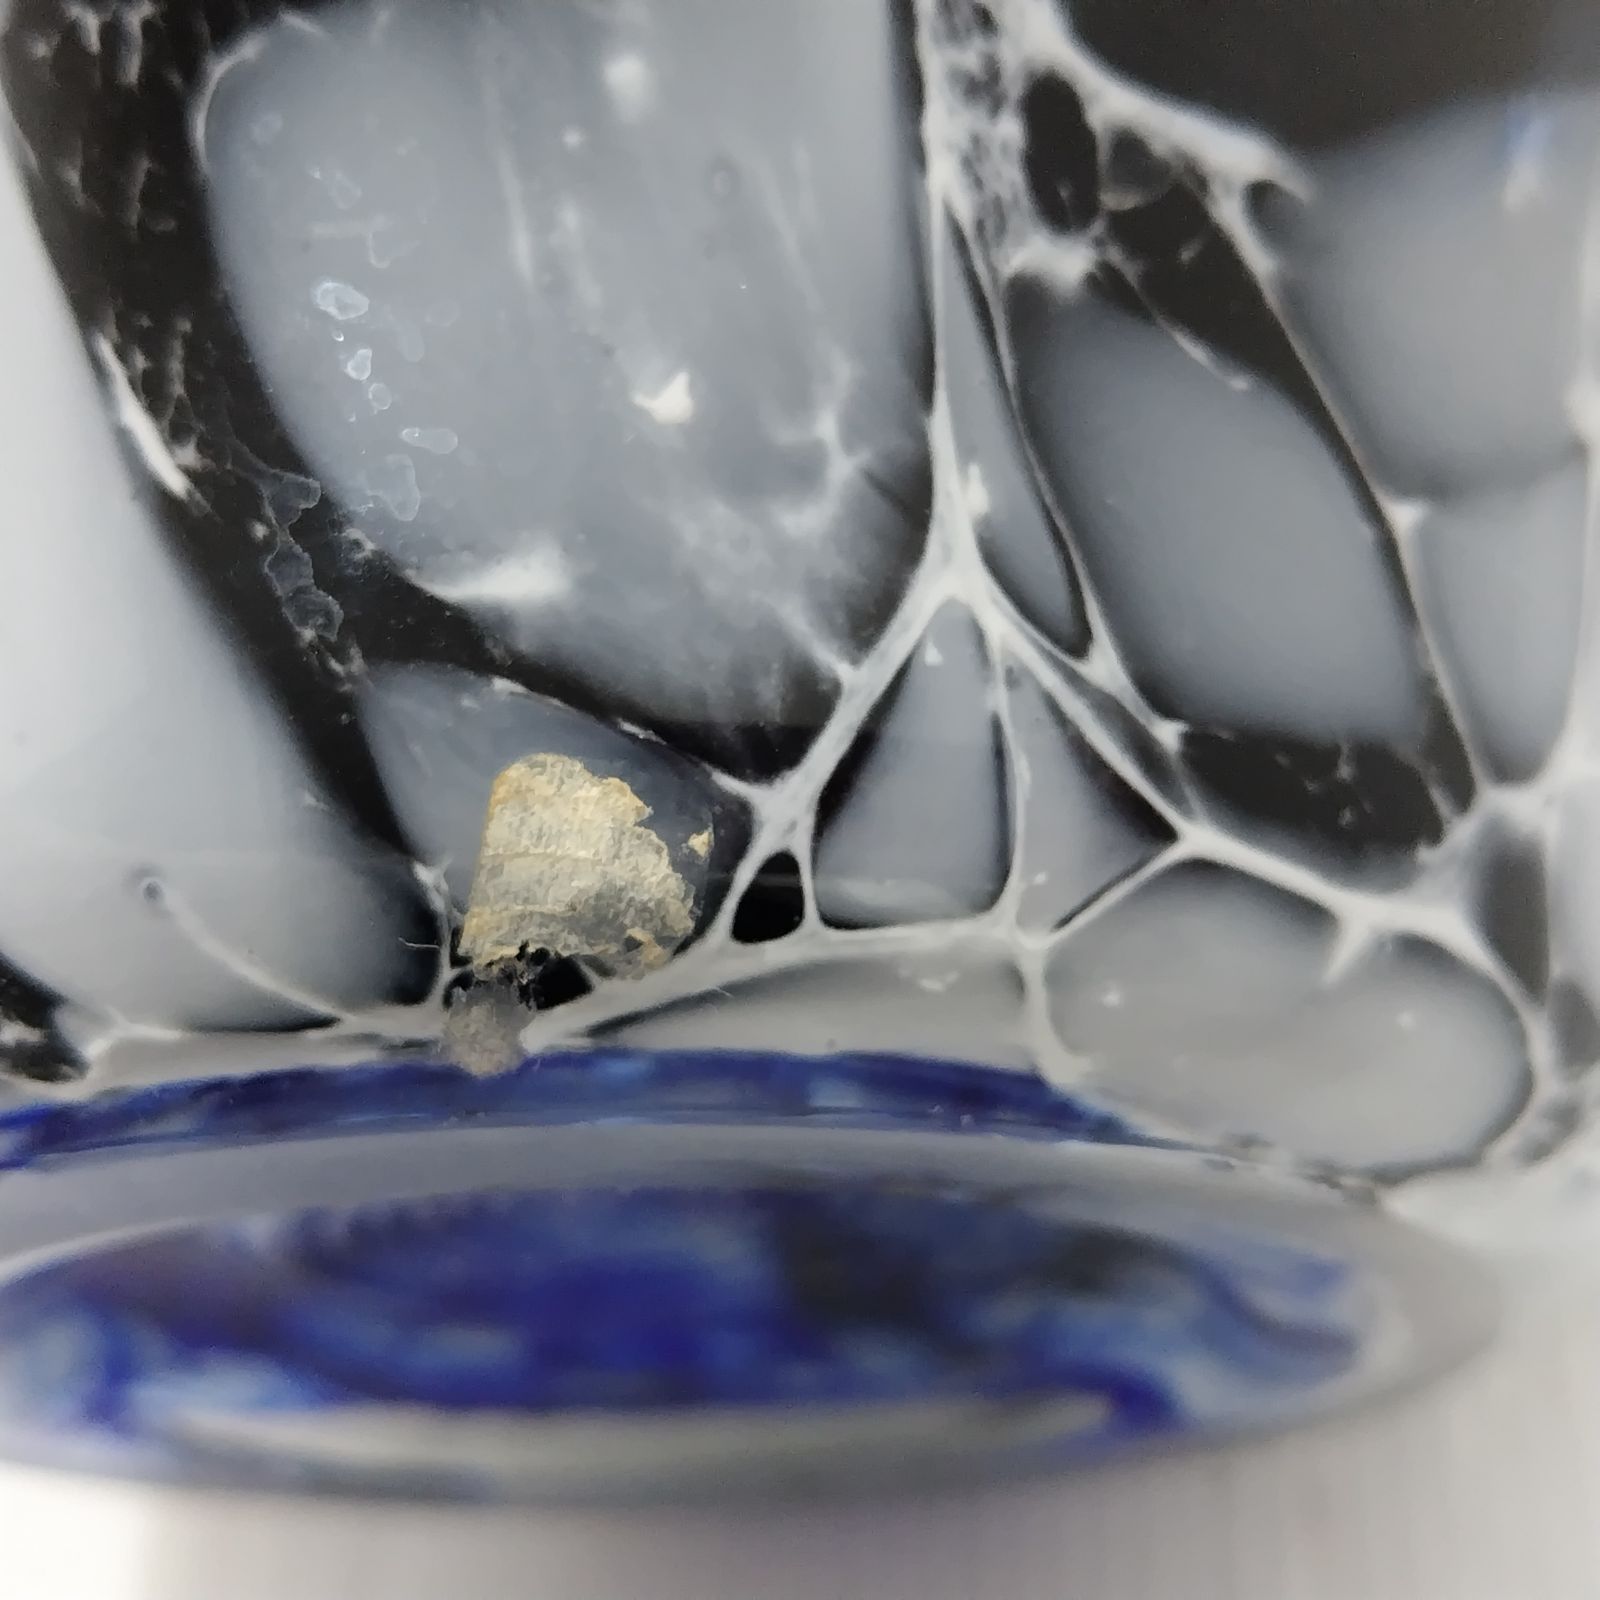 D(0508i10) T.G.K PINE GLASS 東海硝子 花瓶 花器 フラワーベース 花入 花生 置物 インテリア ガラス  直径(最大)20cm×高さ26cm